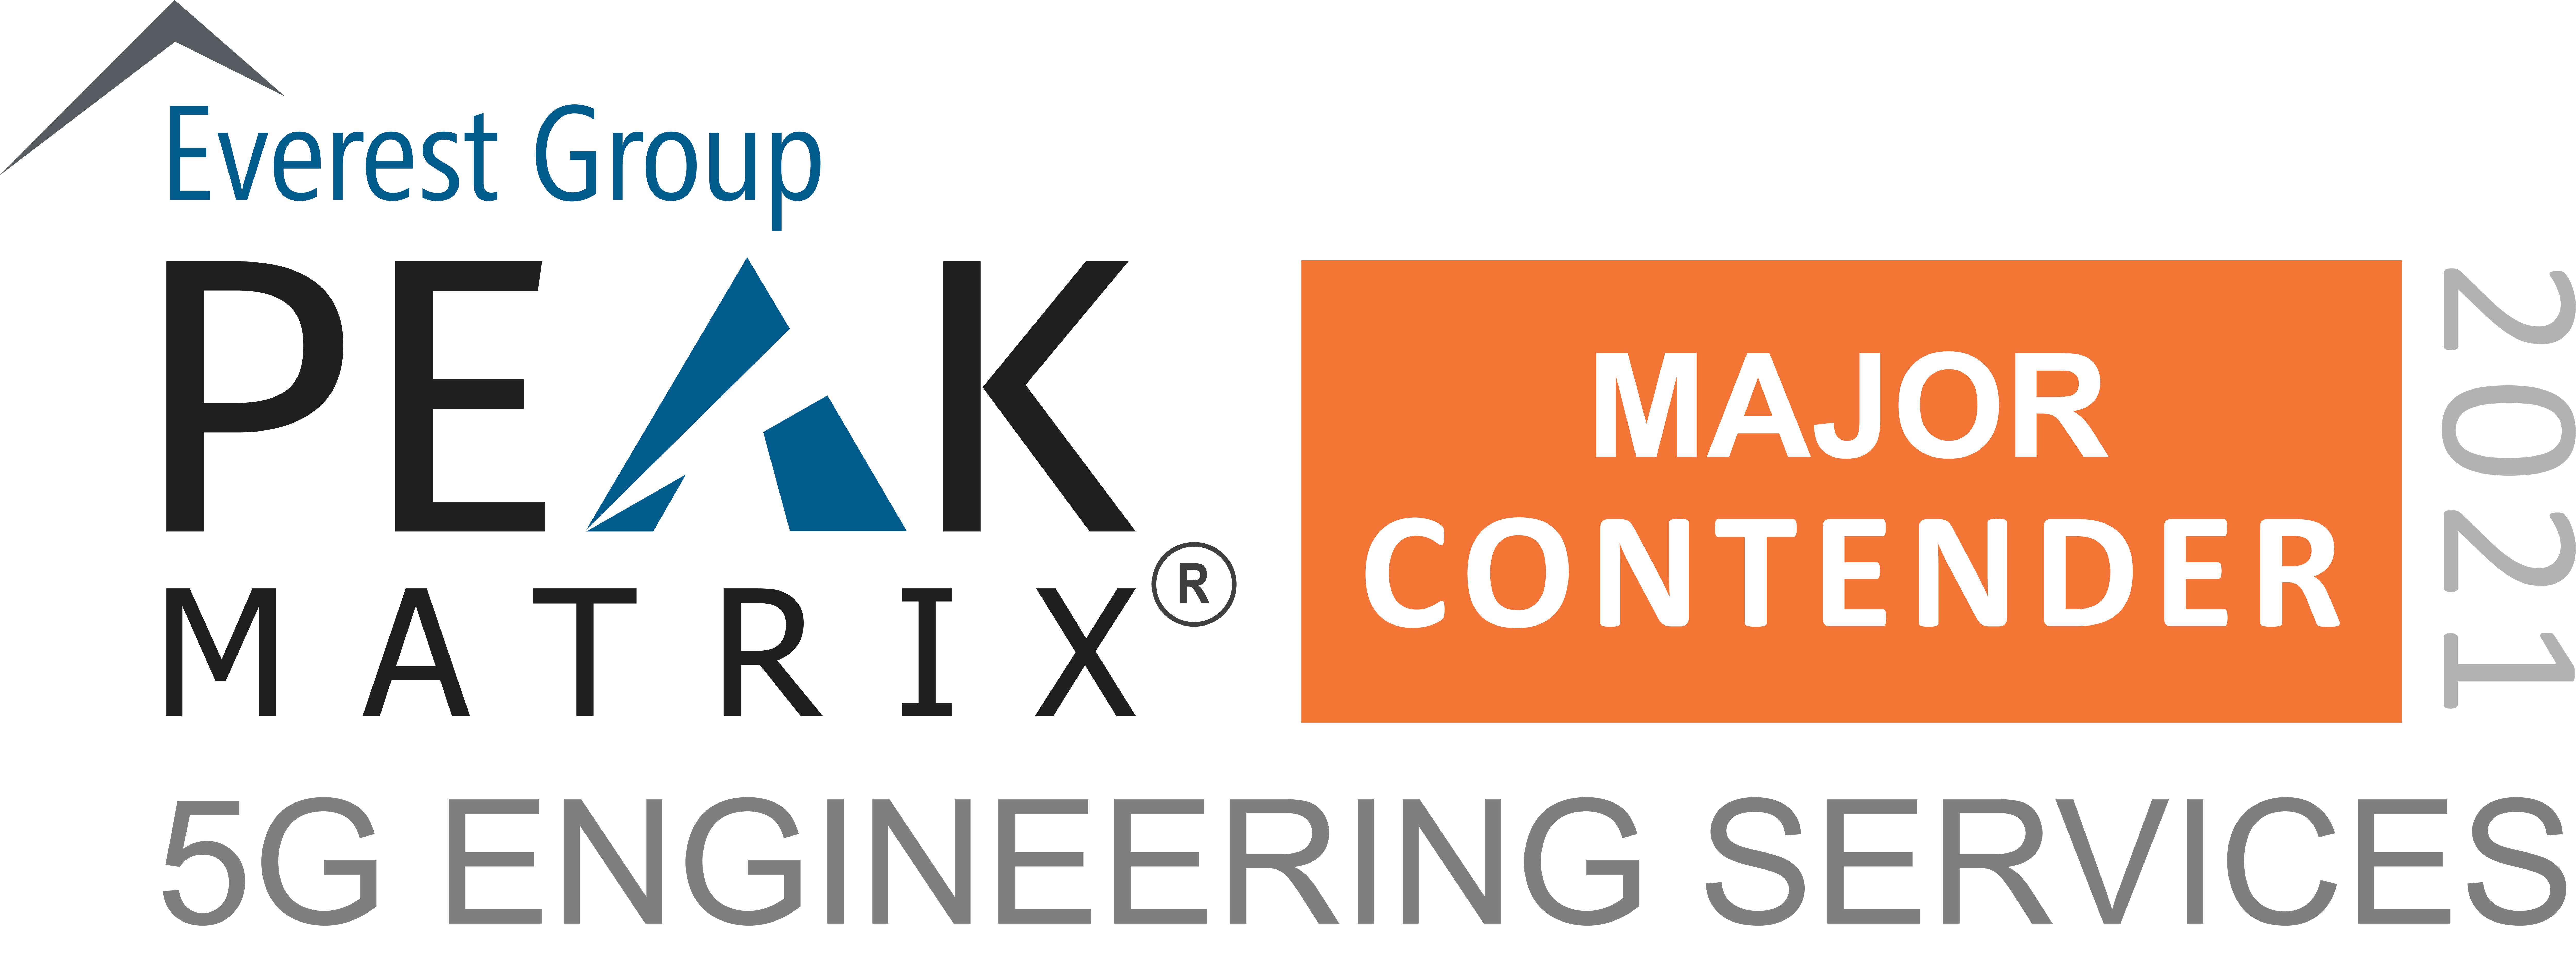 5G Engineering Services 2021 - PEAK Matrix Award Logo - Major Contender